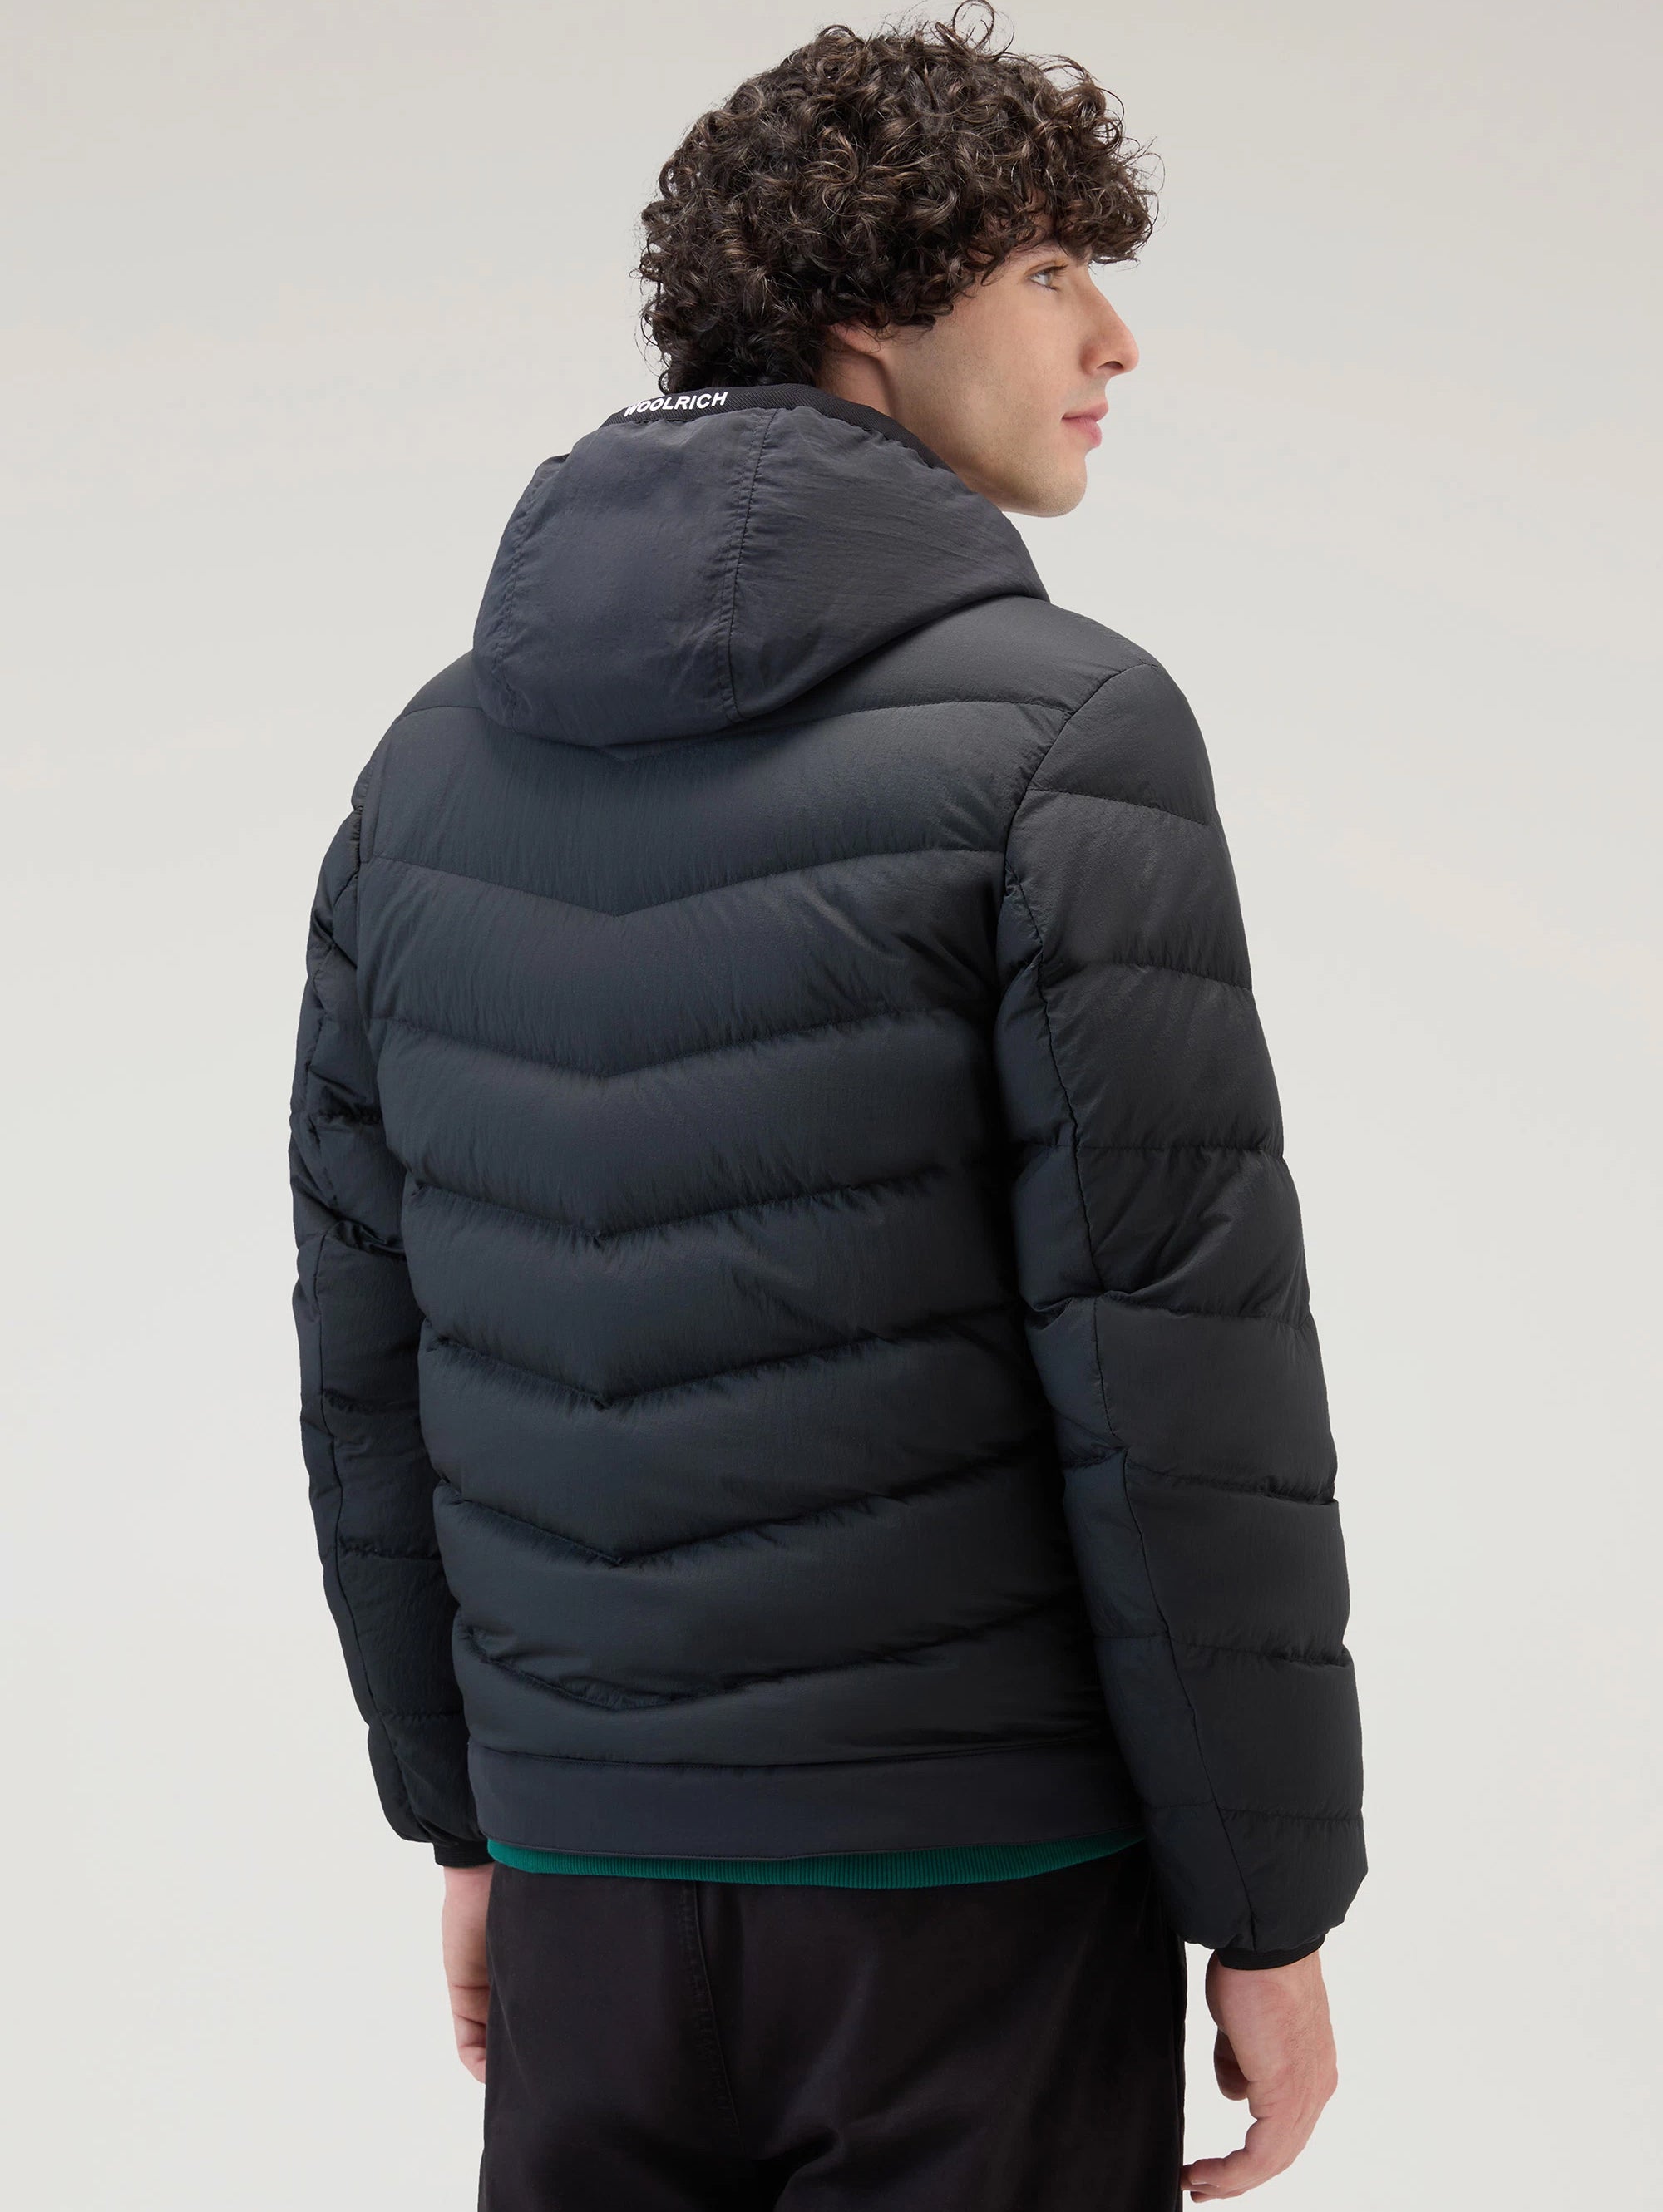 Short down jacket in black crinkle nylon